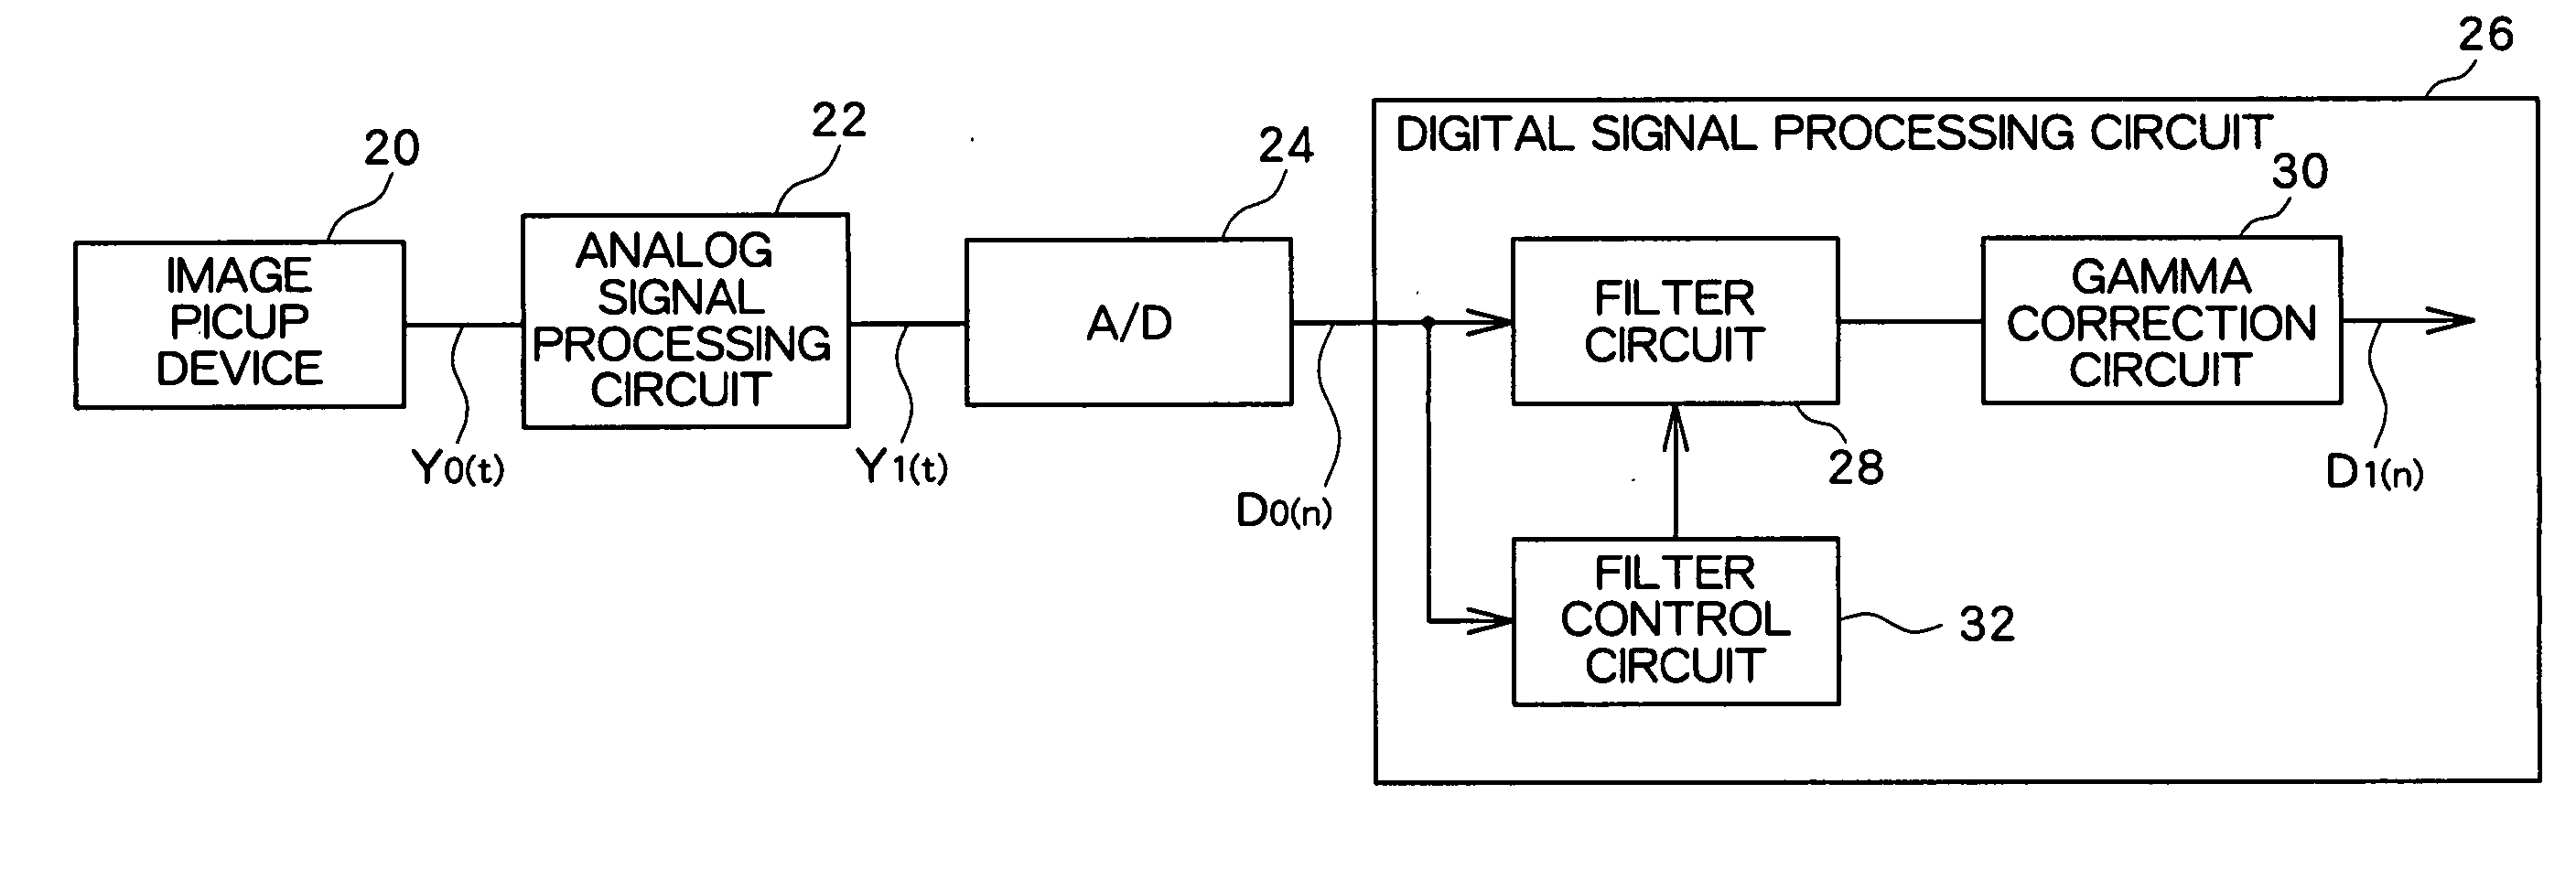 Image signal processing apparatus